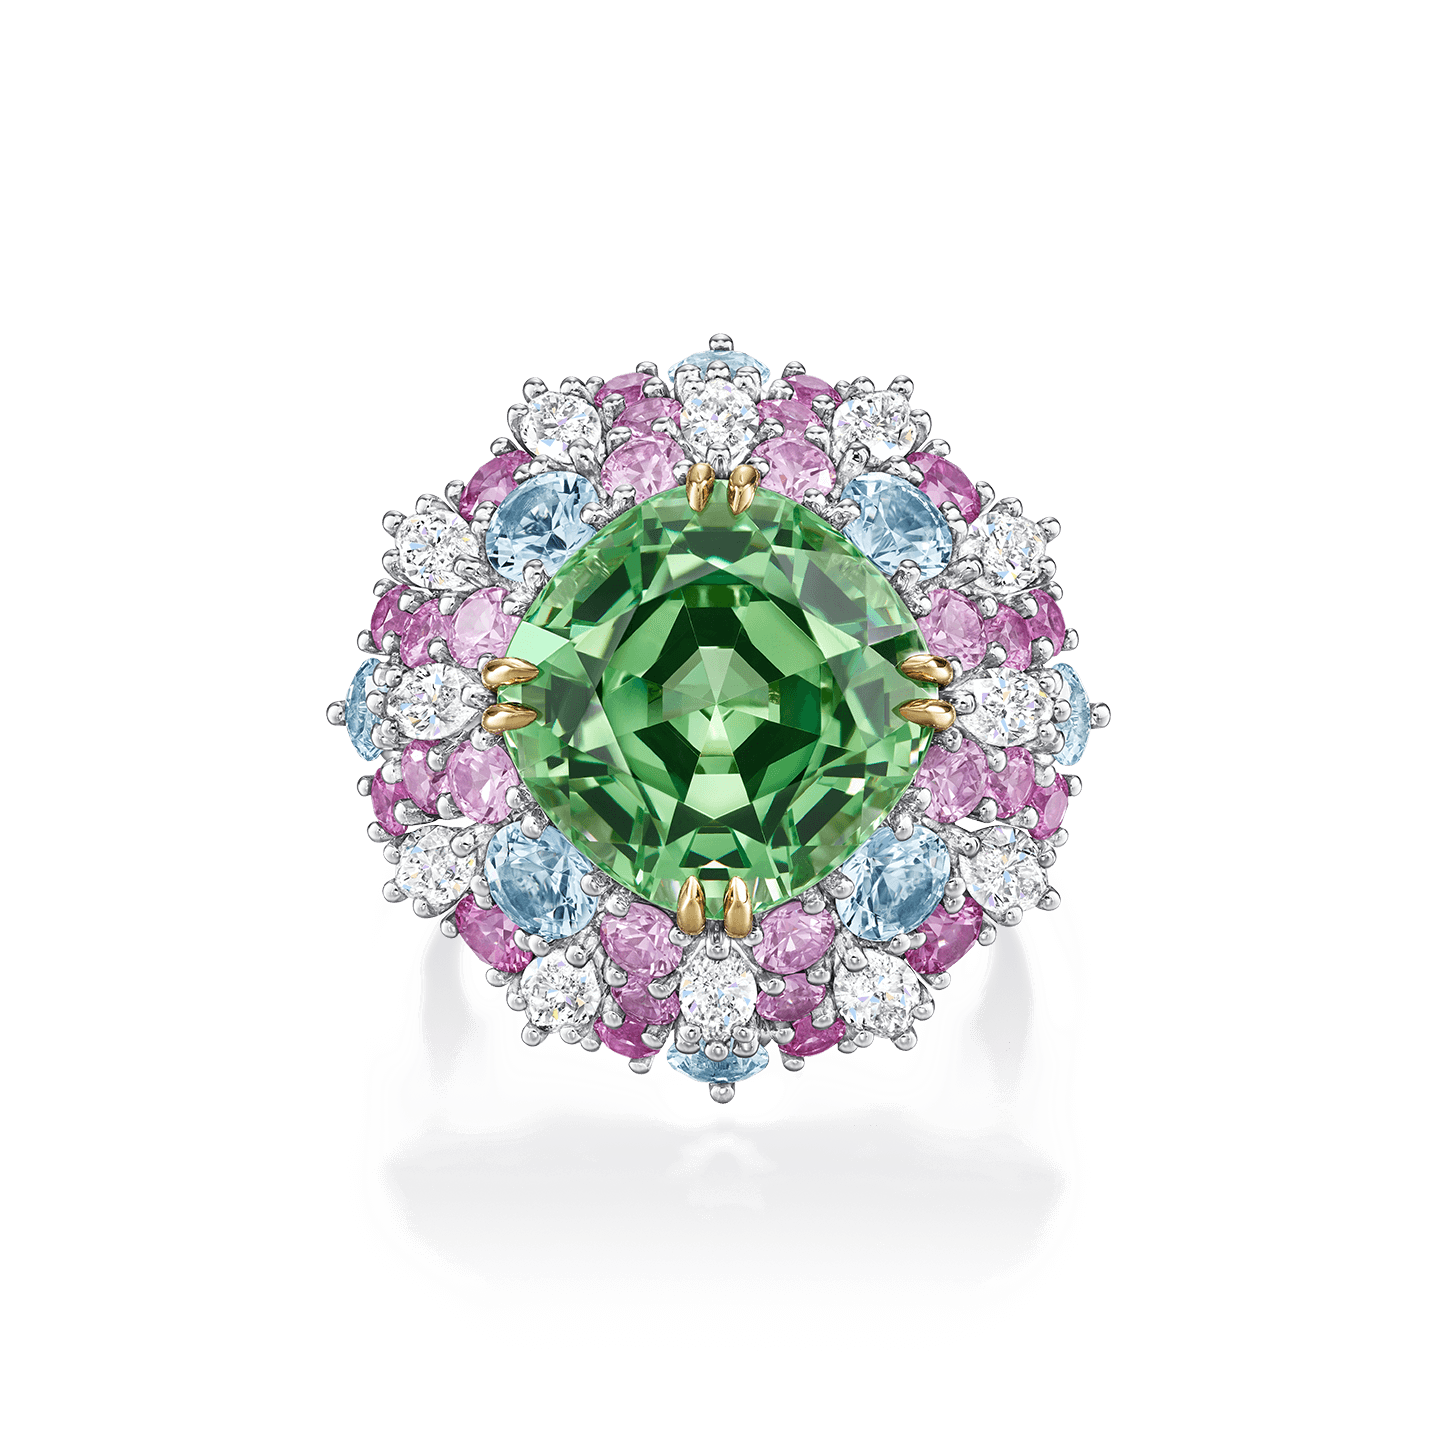 Winston Candy Tsavorite Garnet Ring with Sapphires, Aquamarines and Diamonds